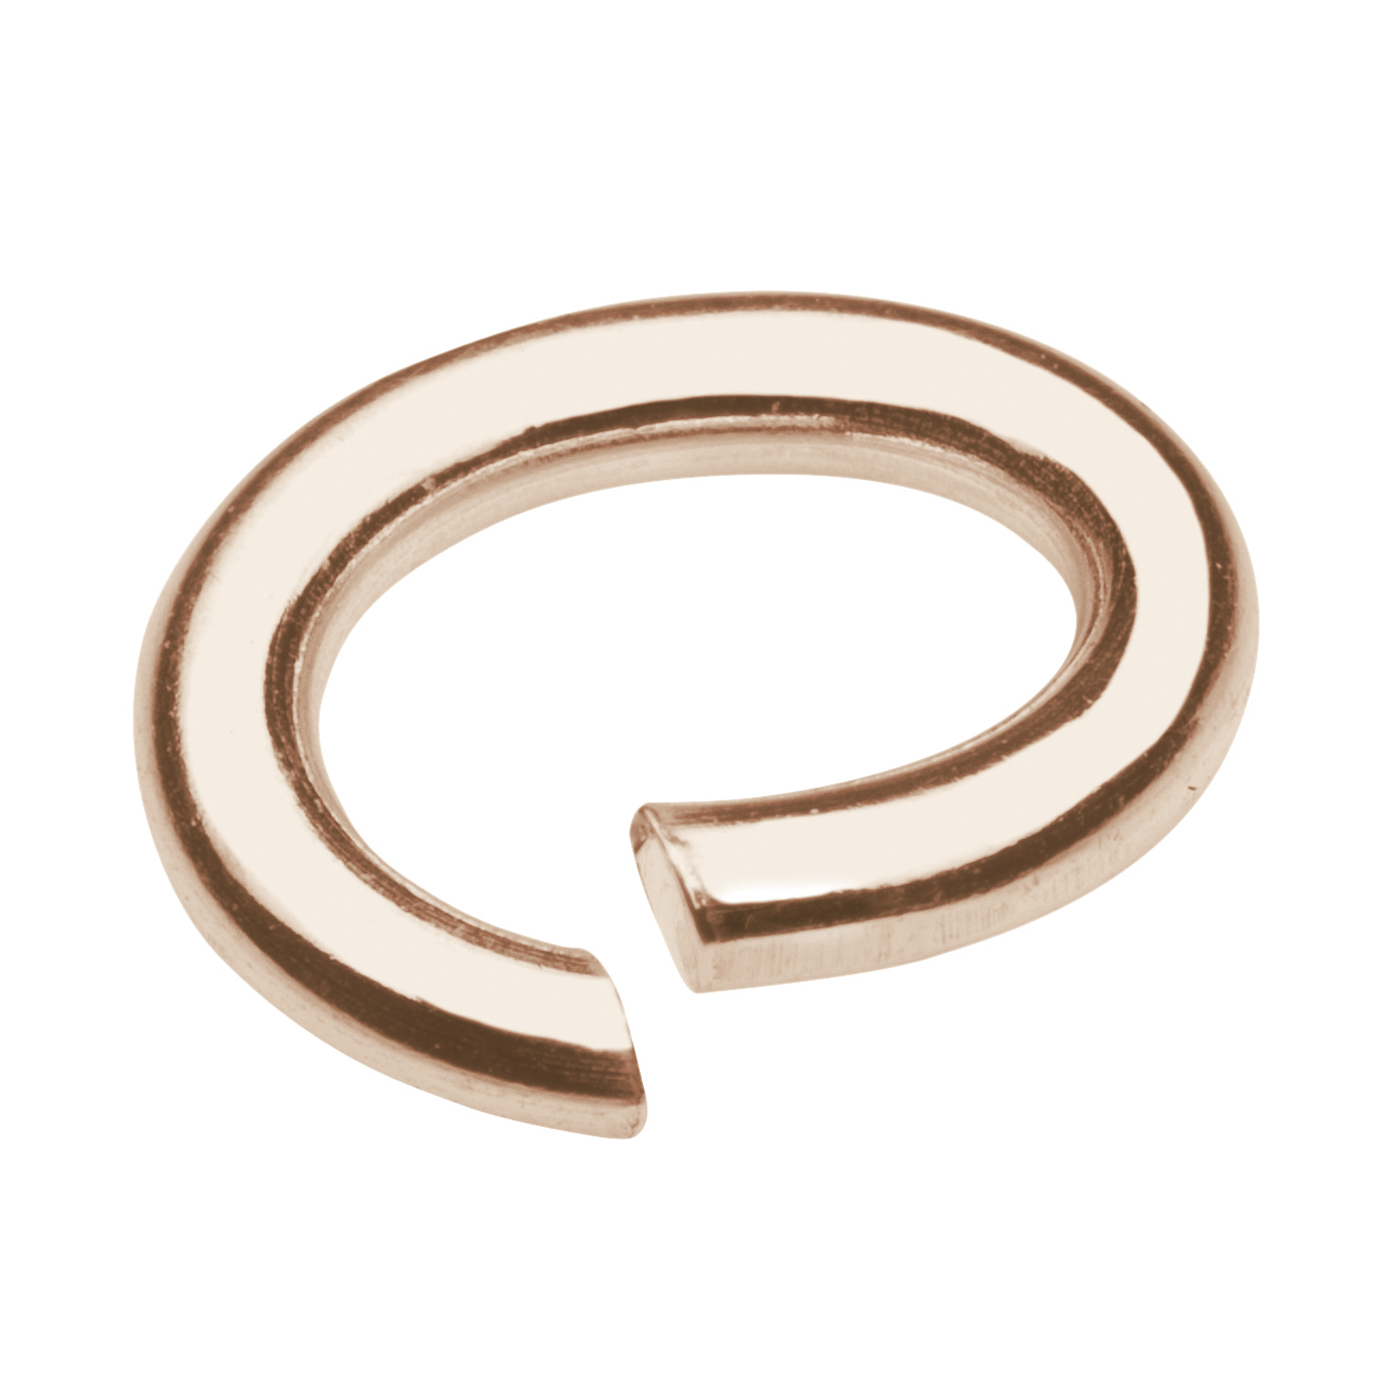 Binding Rings, oval, Doublé rosé, ø 8 mm - 10 pieces